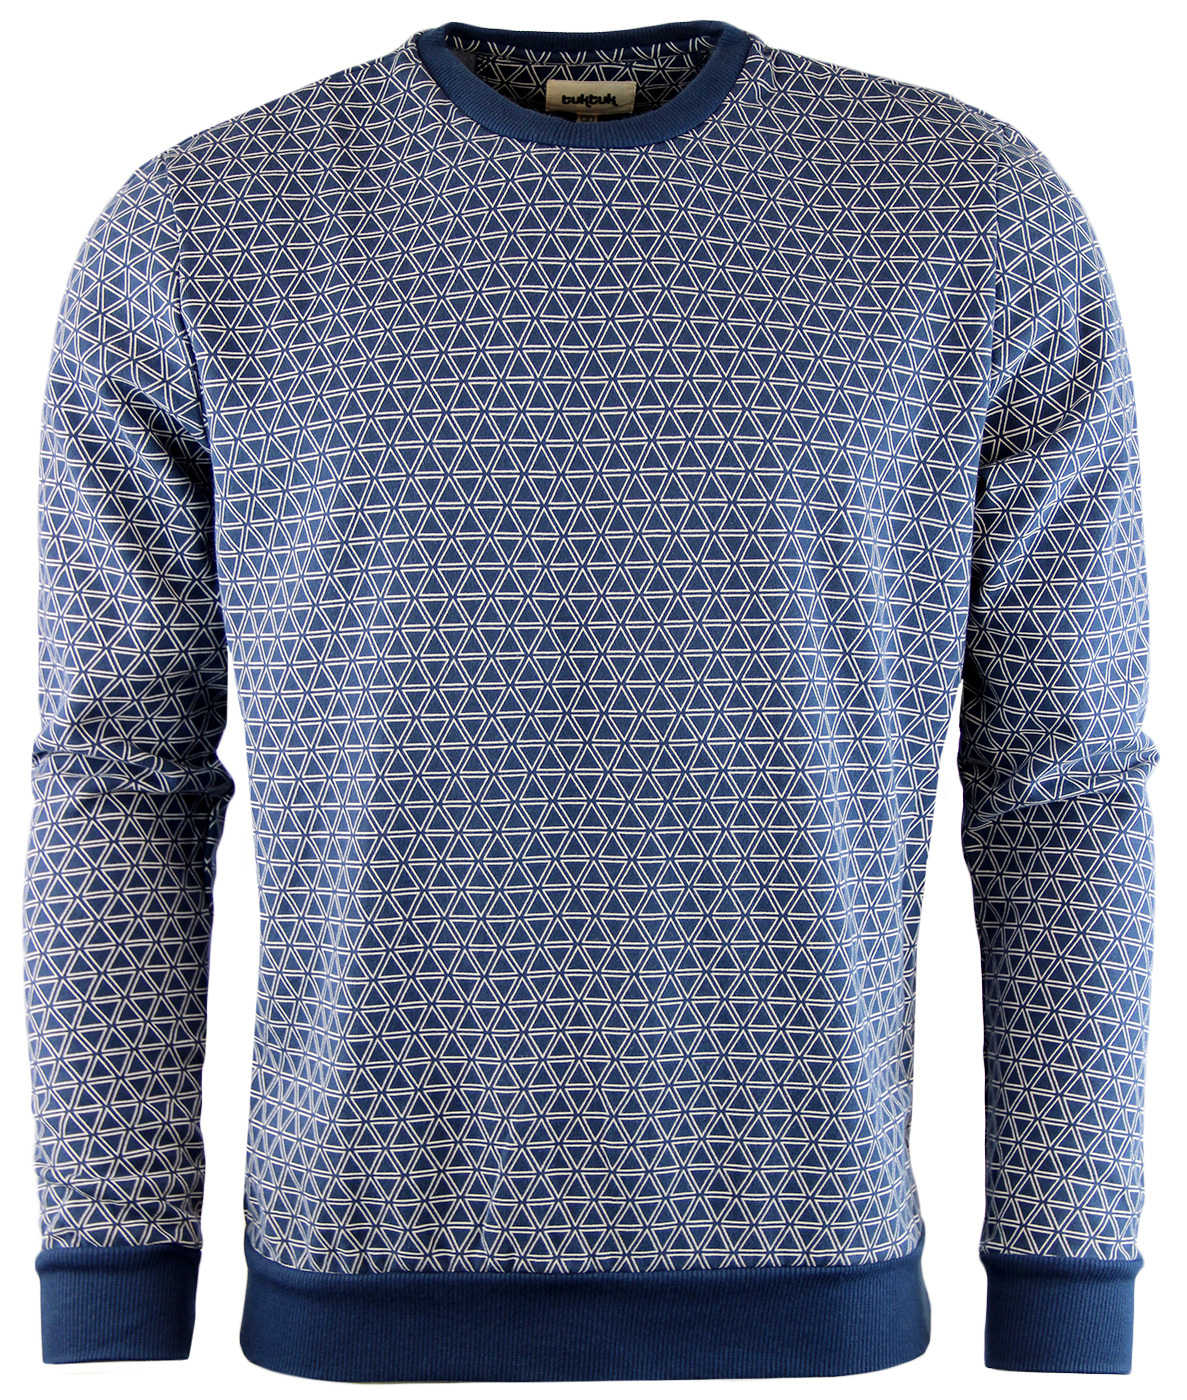 TUKTUK Retro Indie 60s Mens Geometric Triangle Sweater in Navy